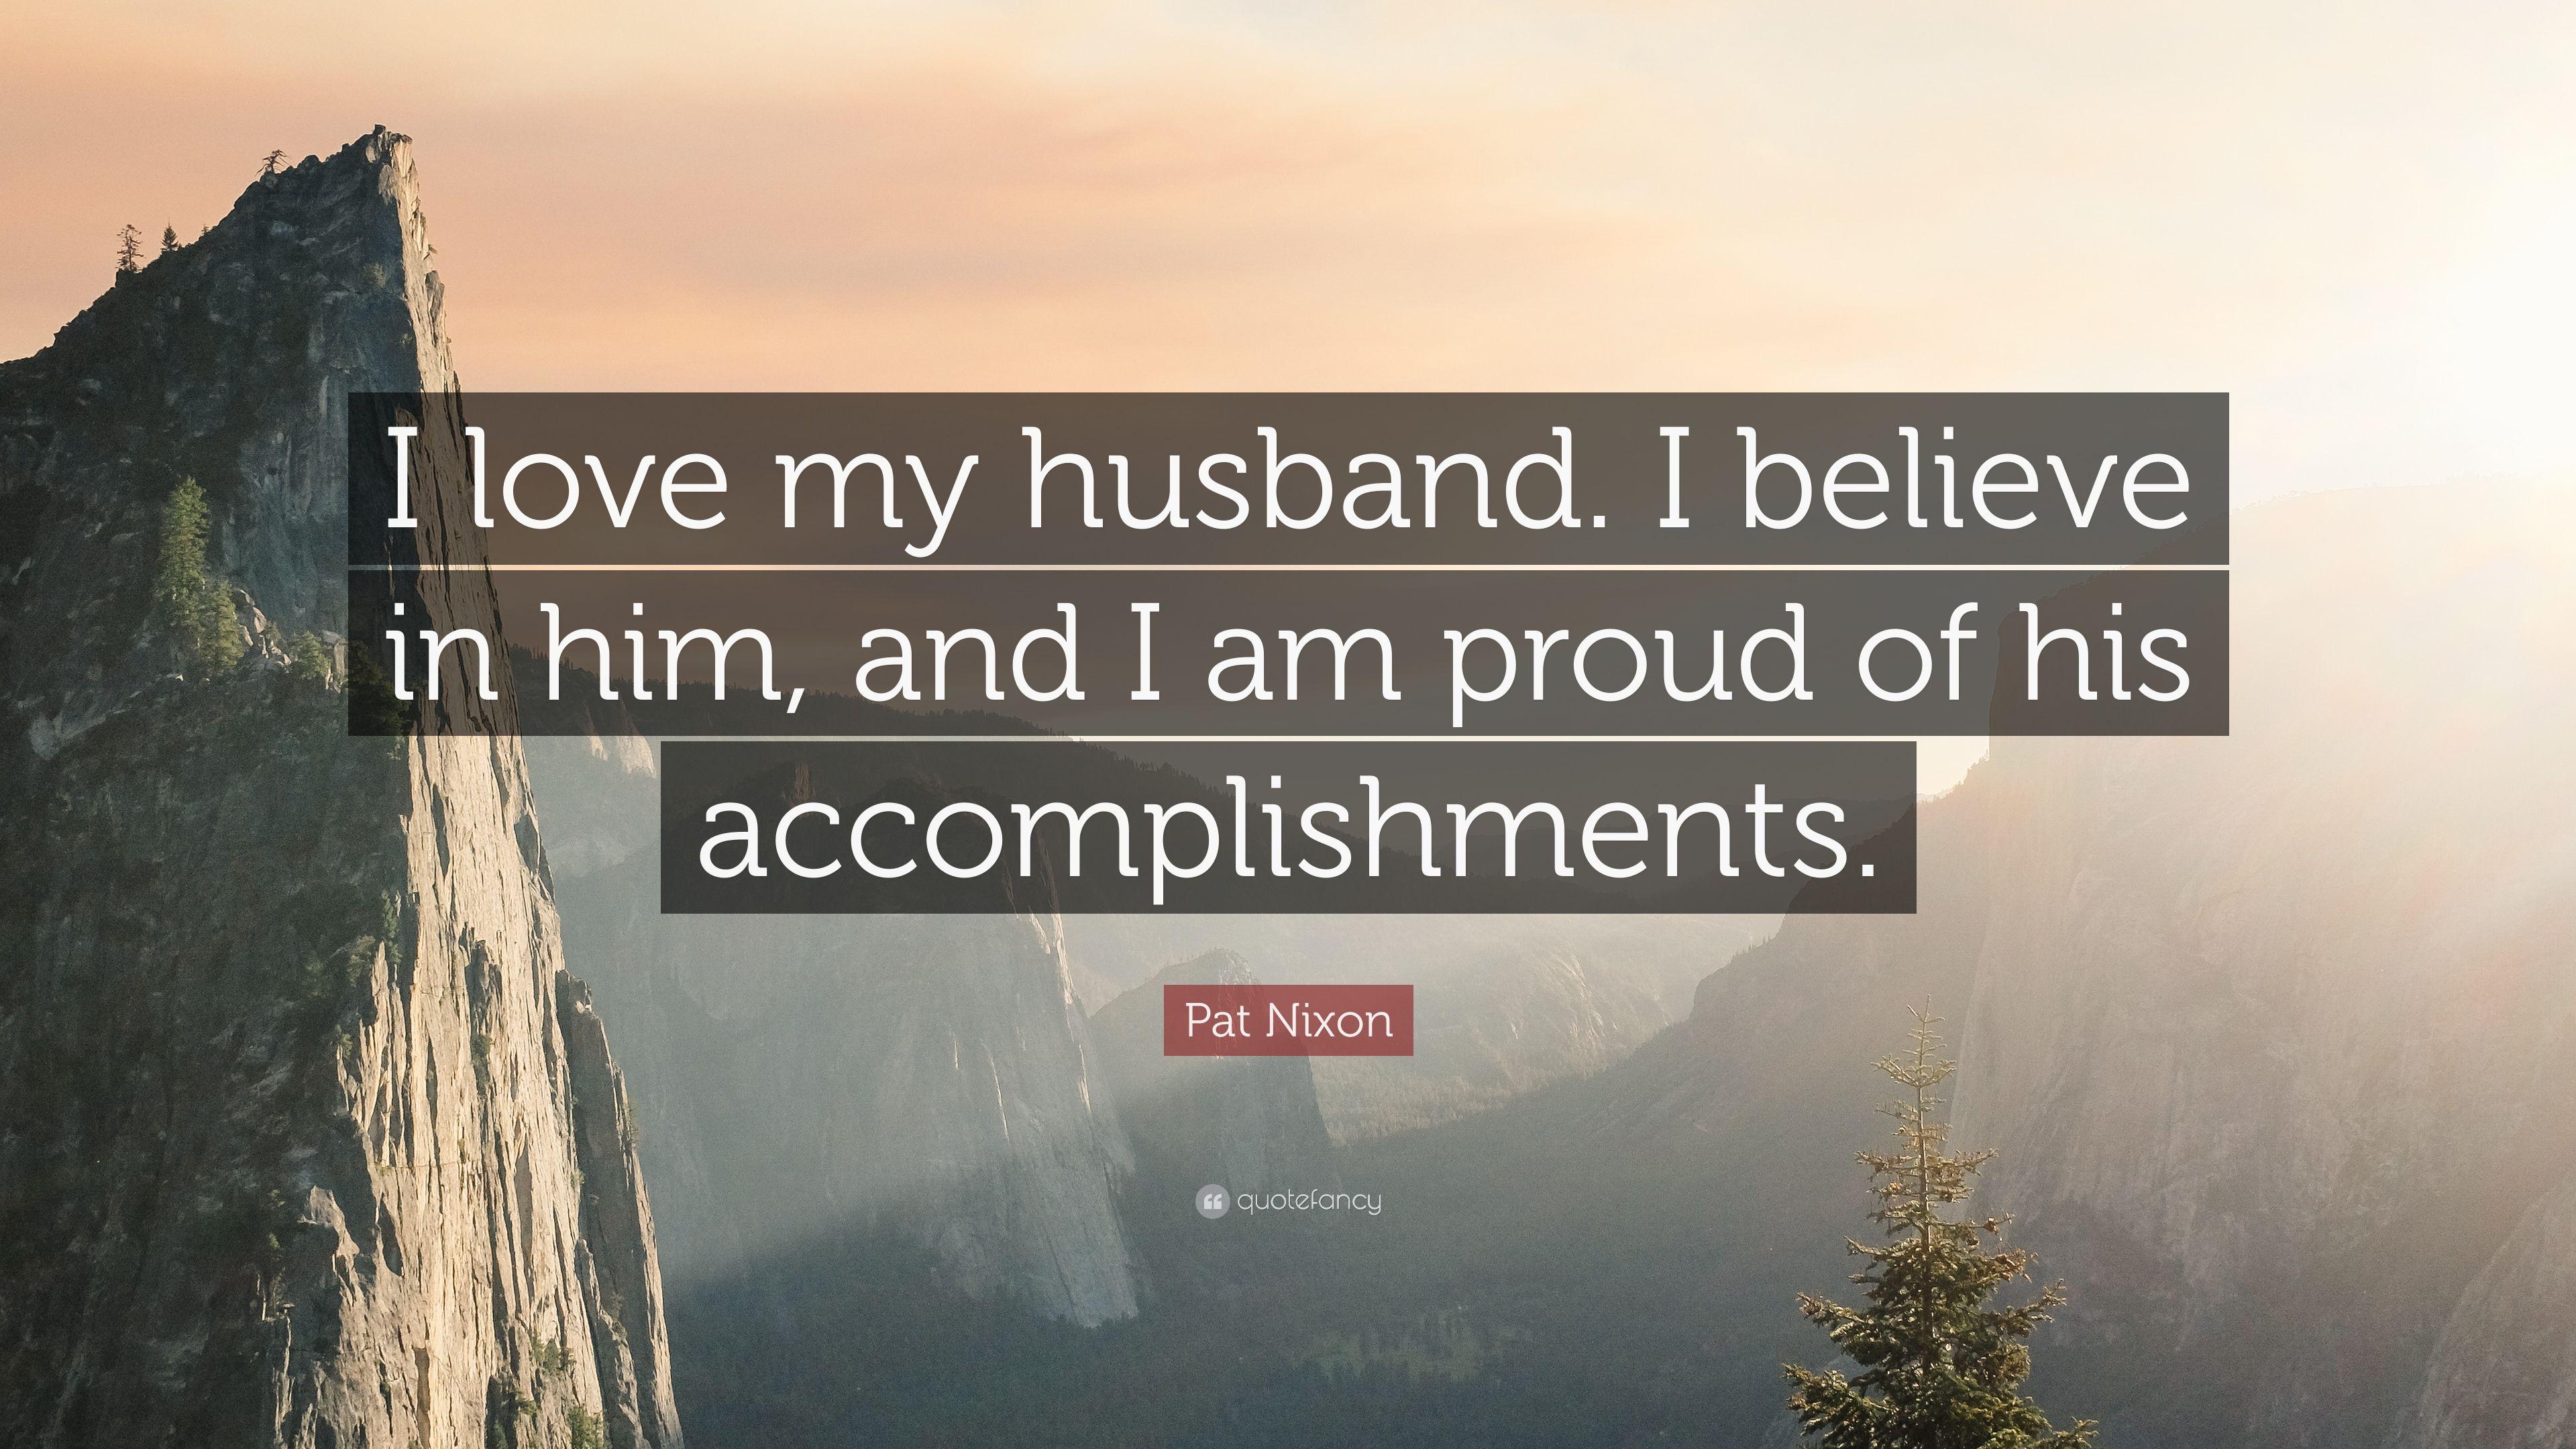 Pat Nixon Quote: “I love my husband. I believe in him, and I am